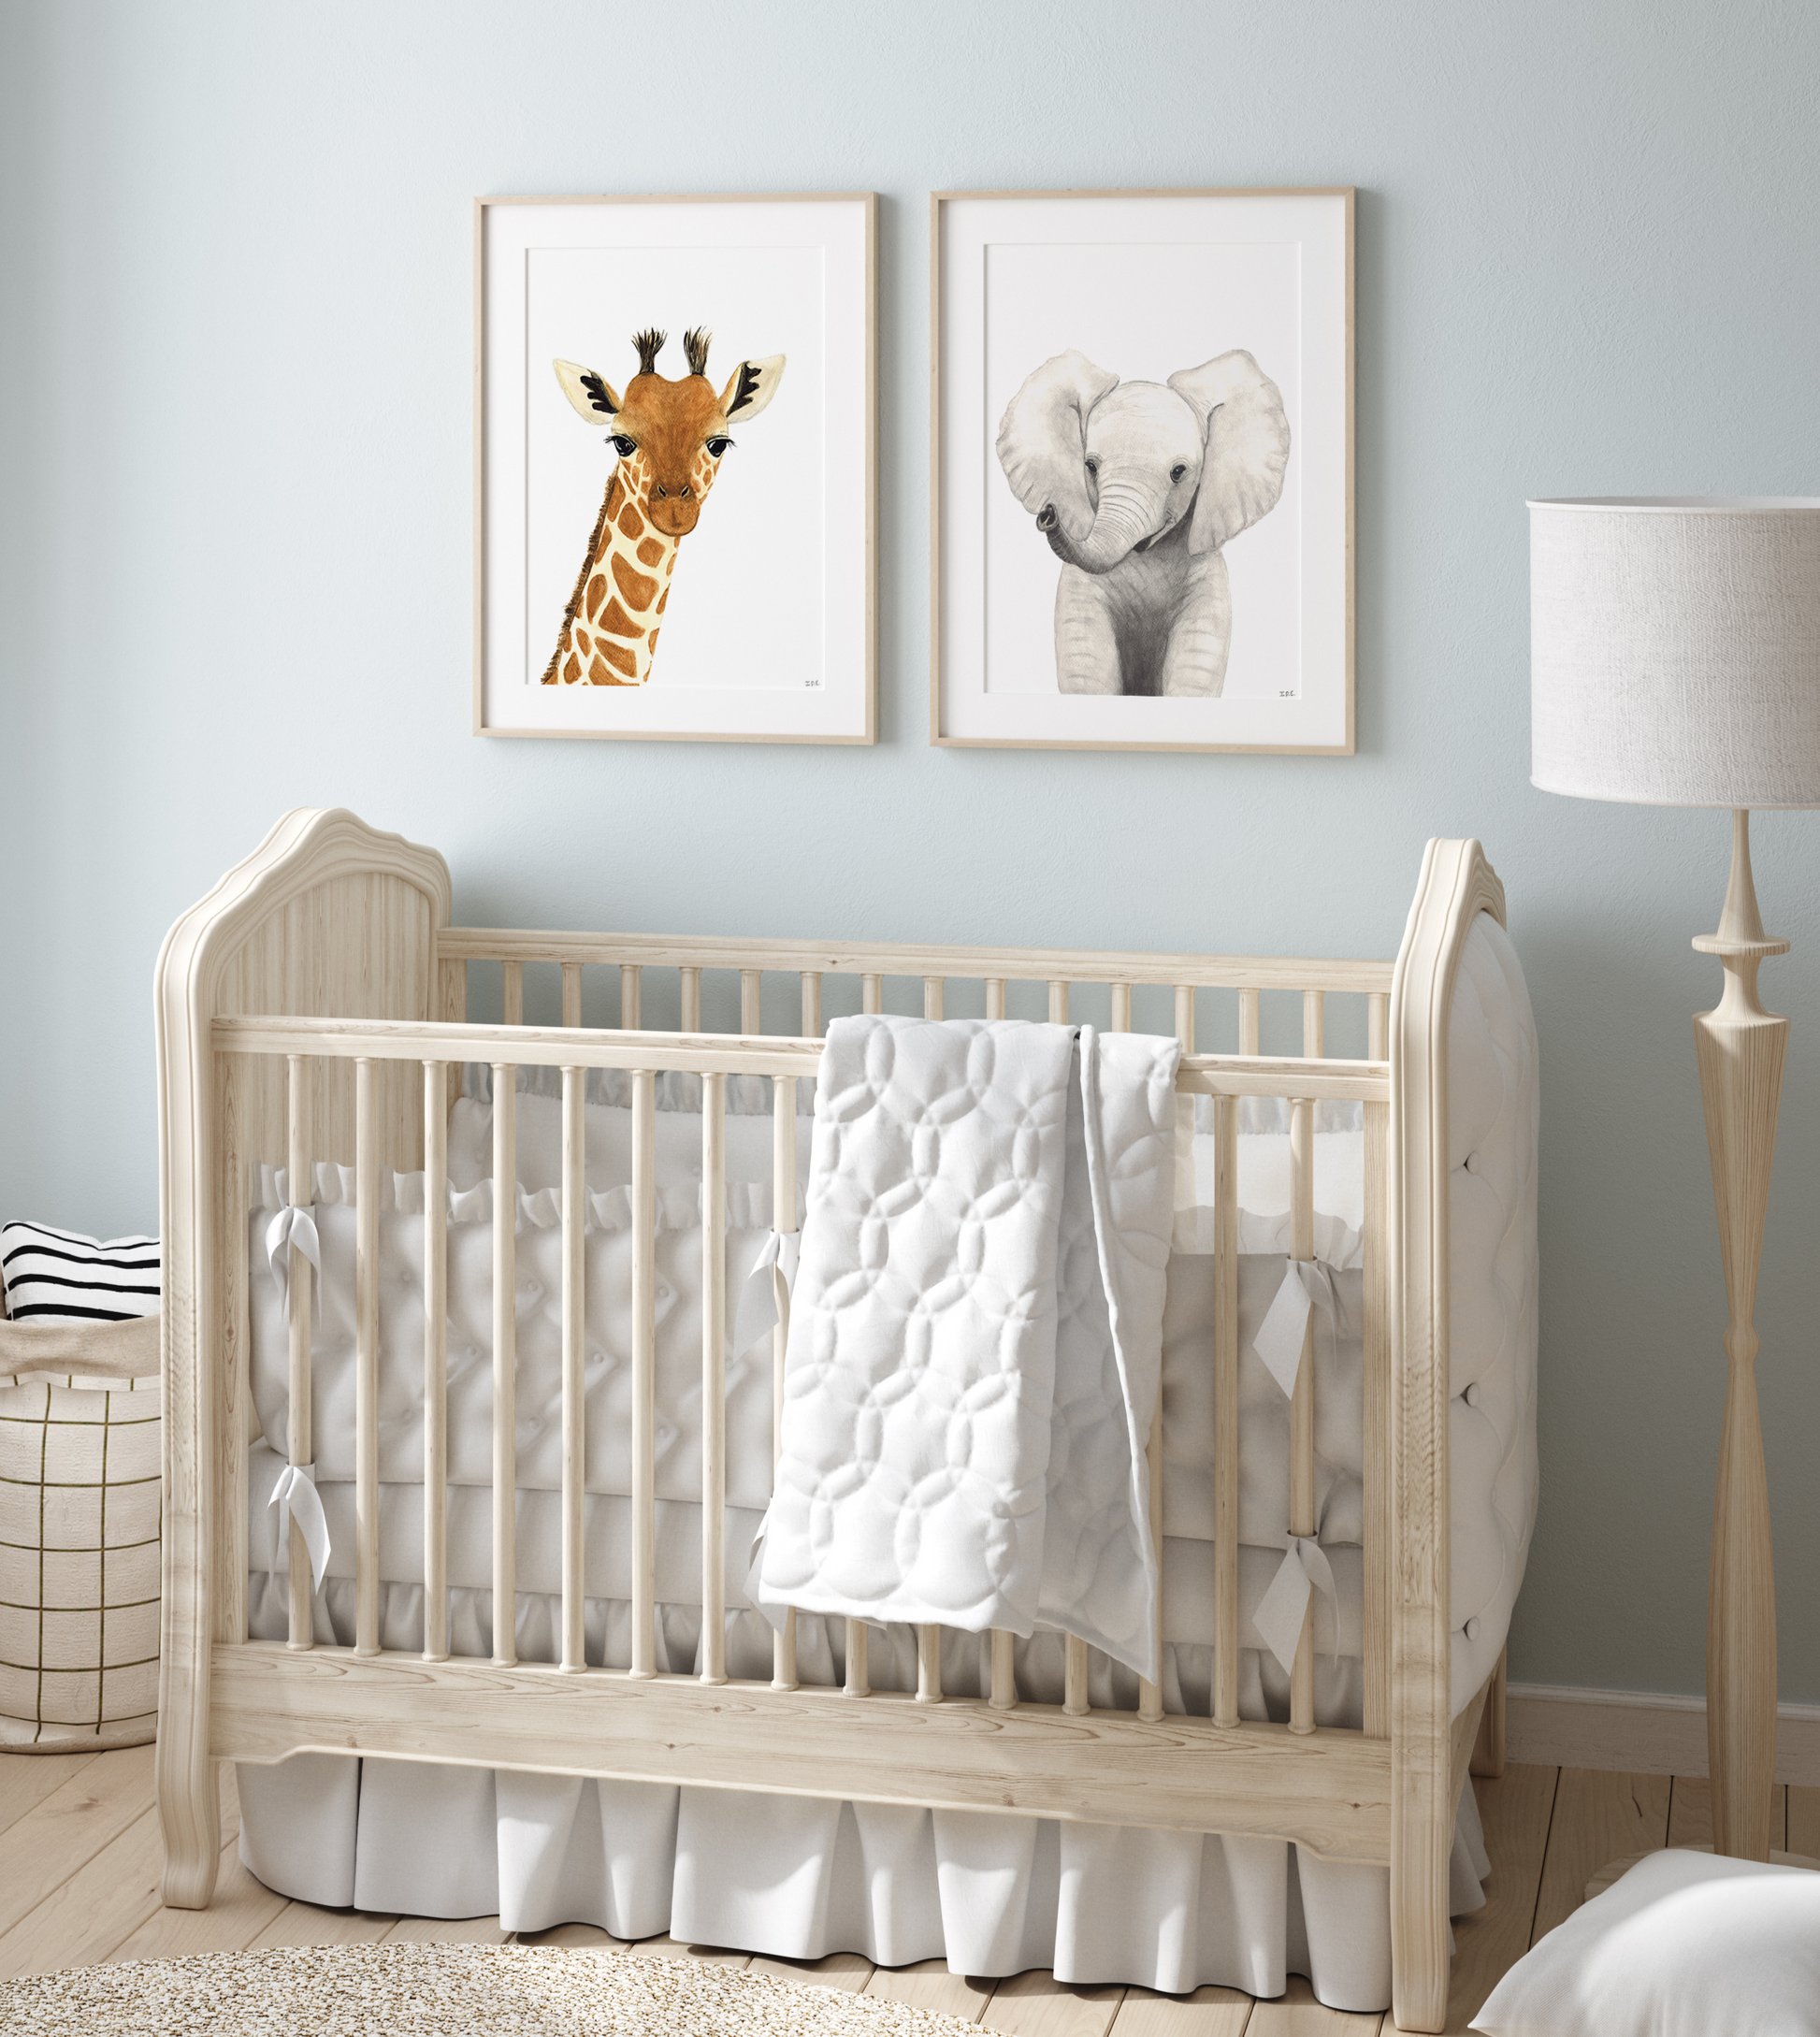 Set of 2 nursery animal prints in a babyroom: giraffe and elephant